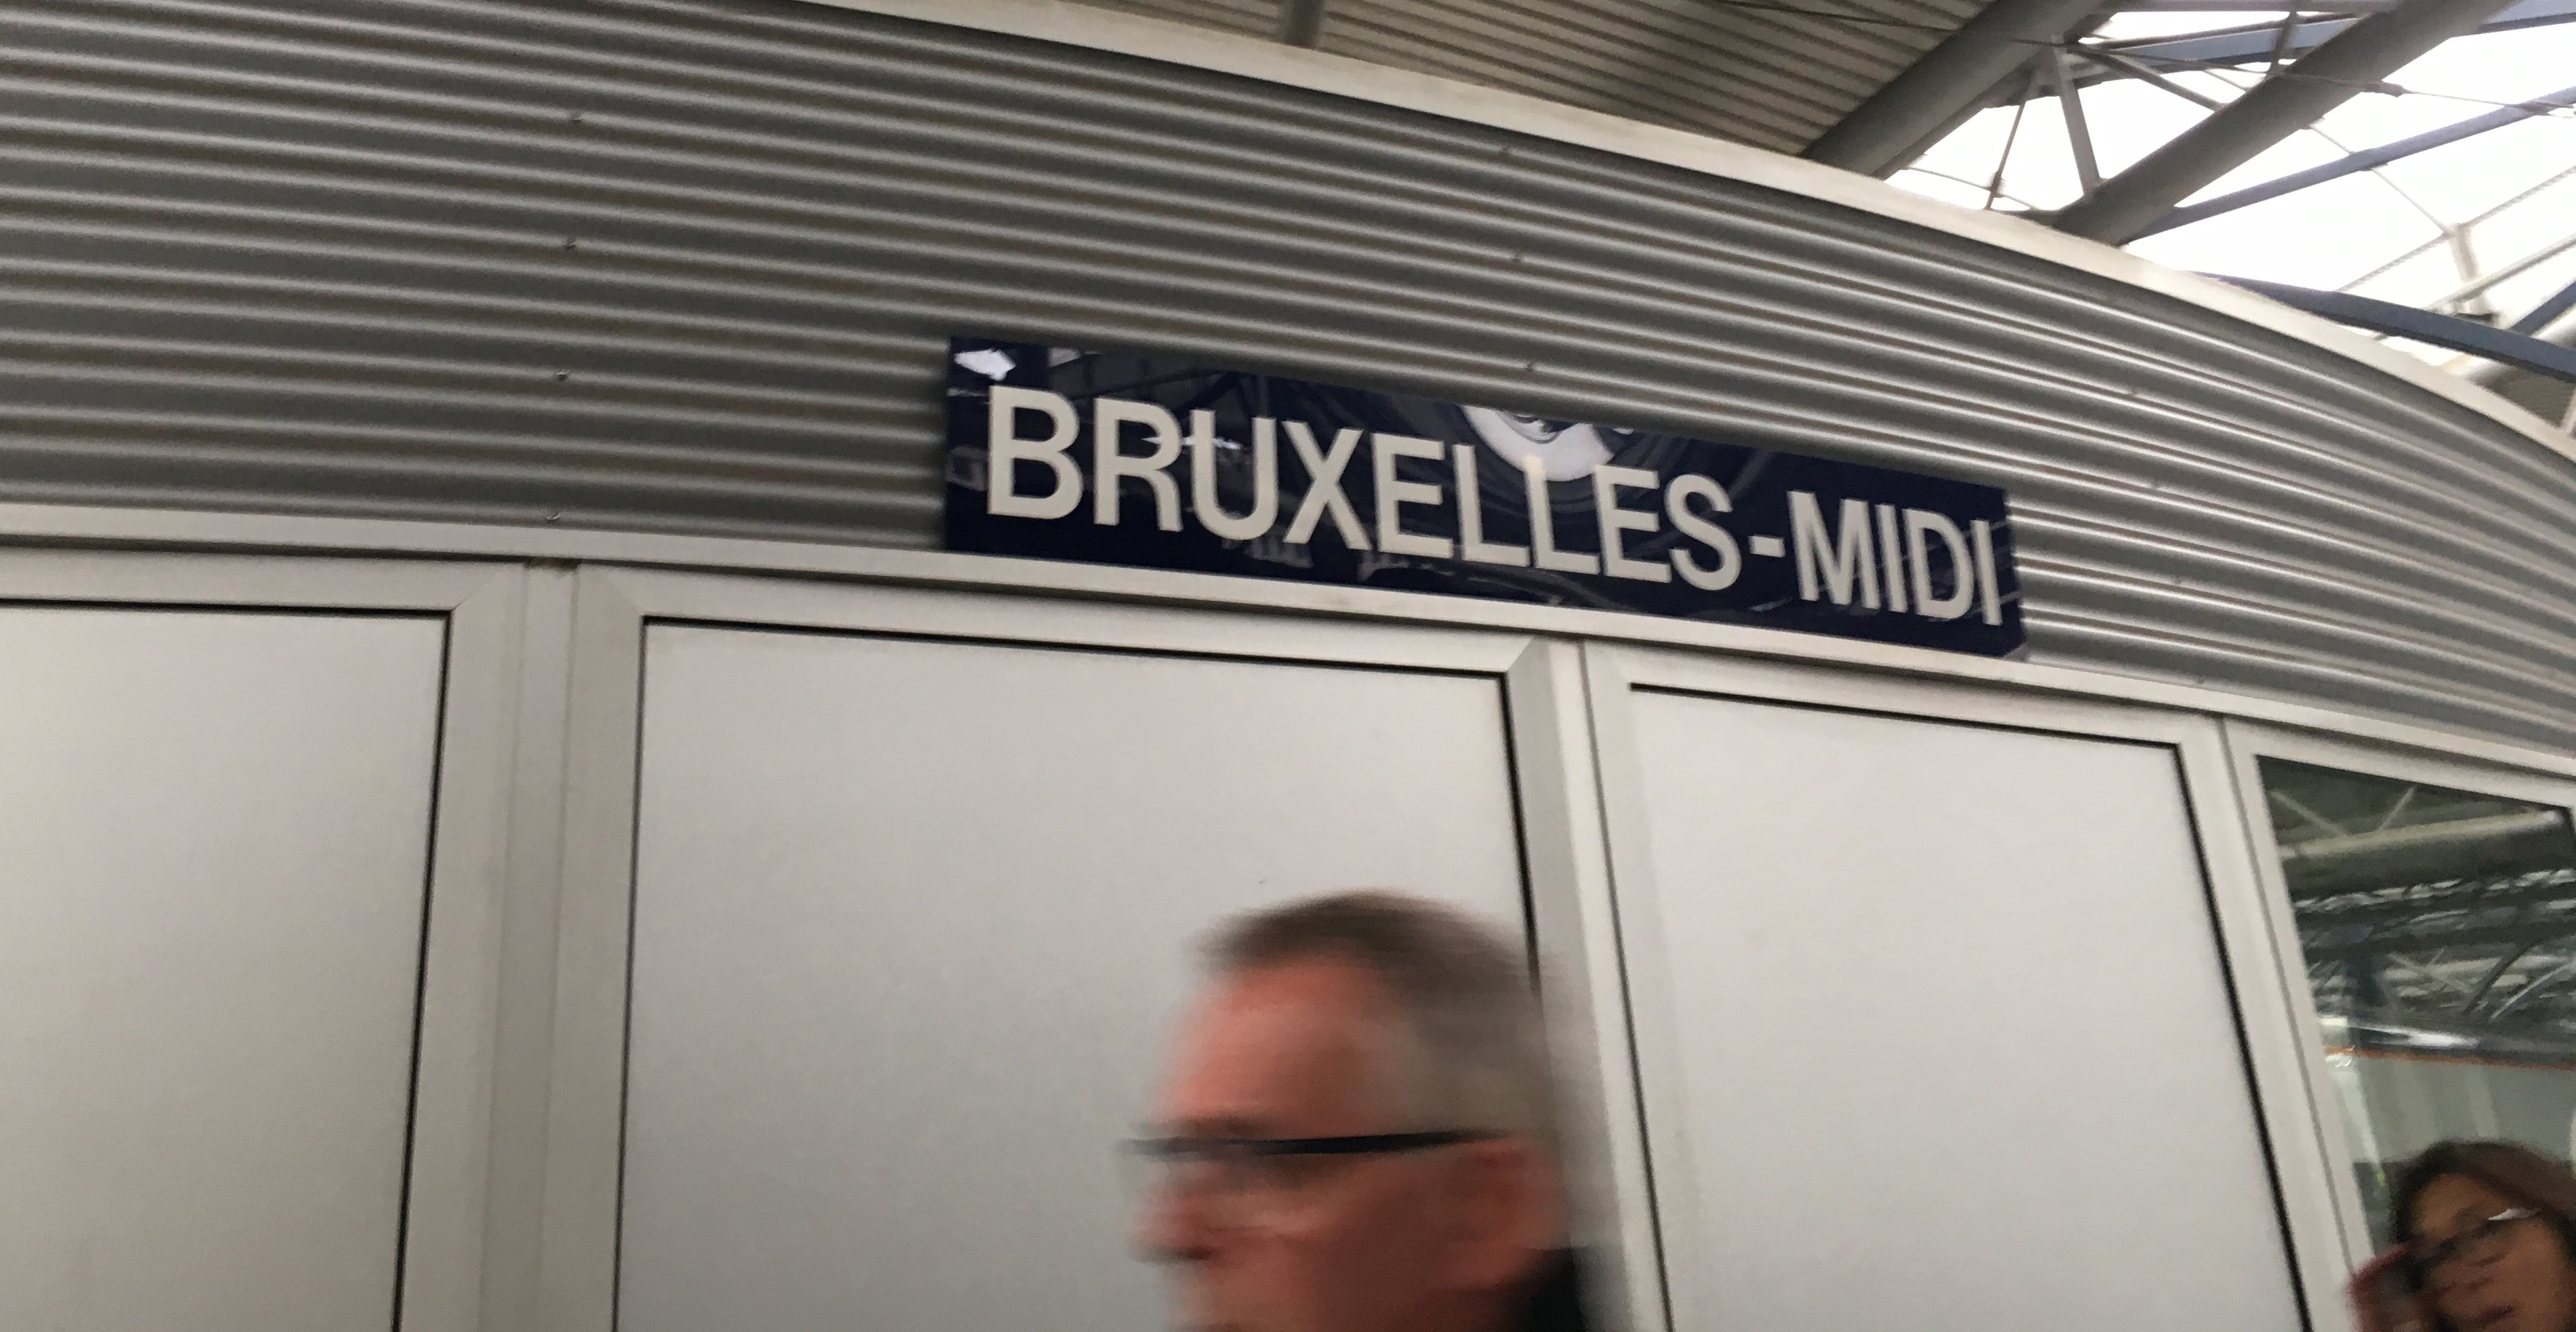 Brussels - Midi sign